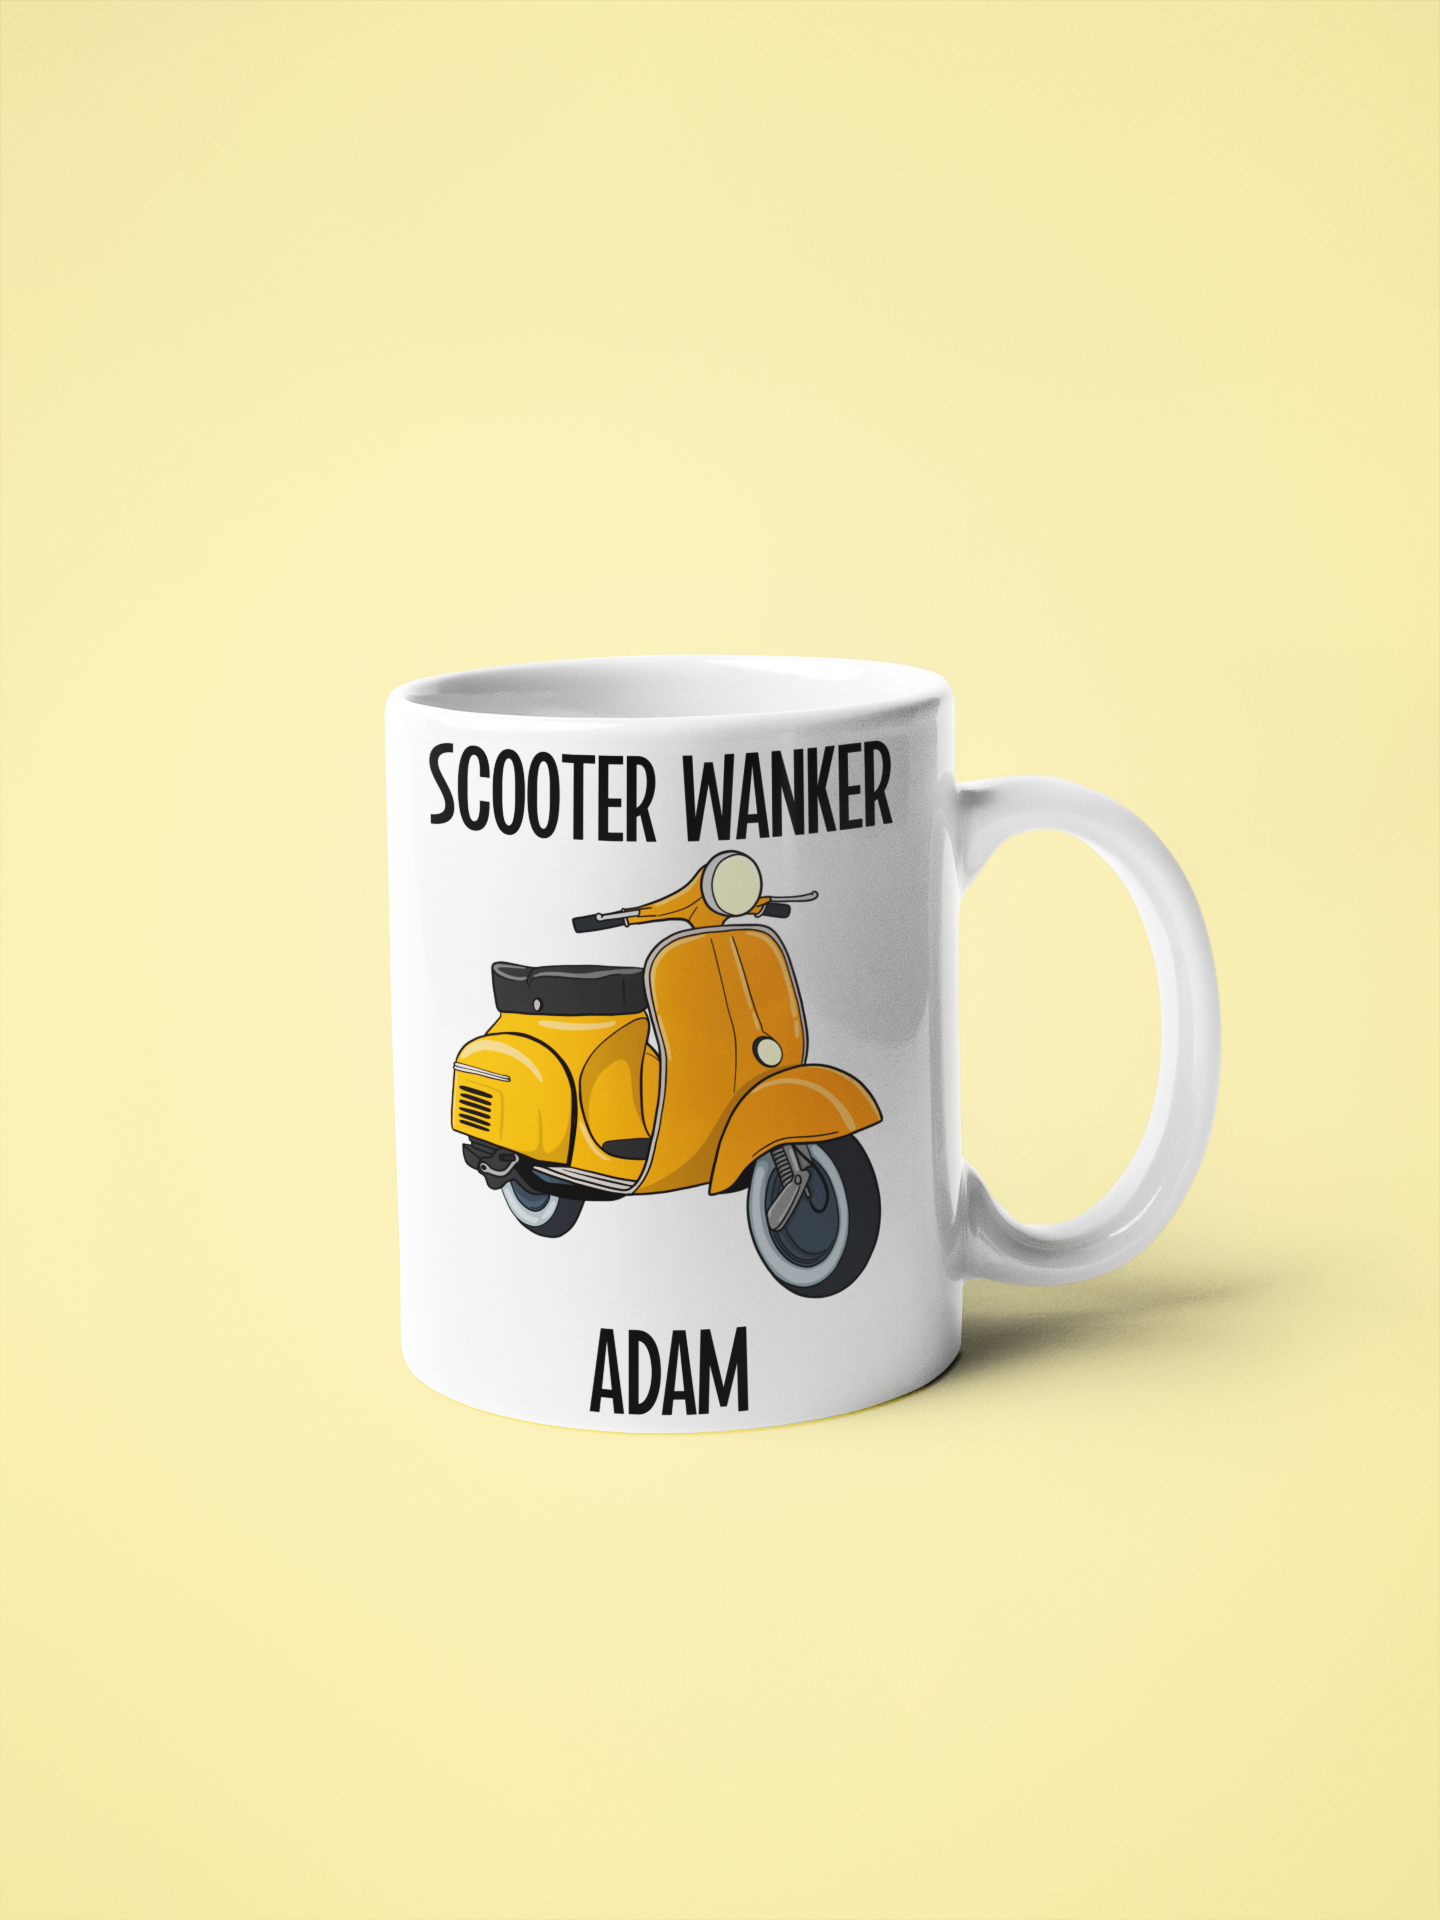 Scooter wanker funny coffee mug